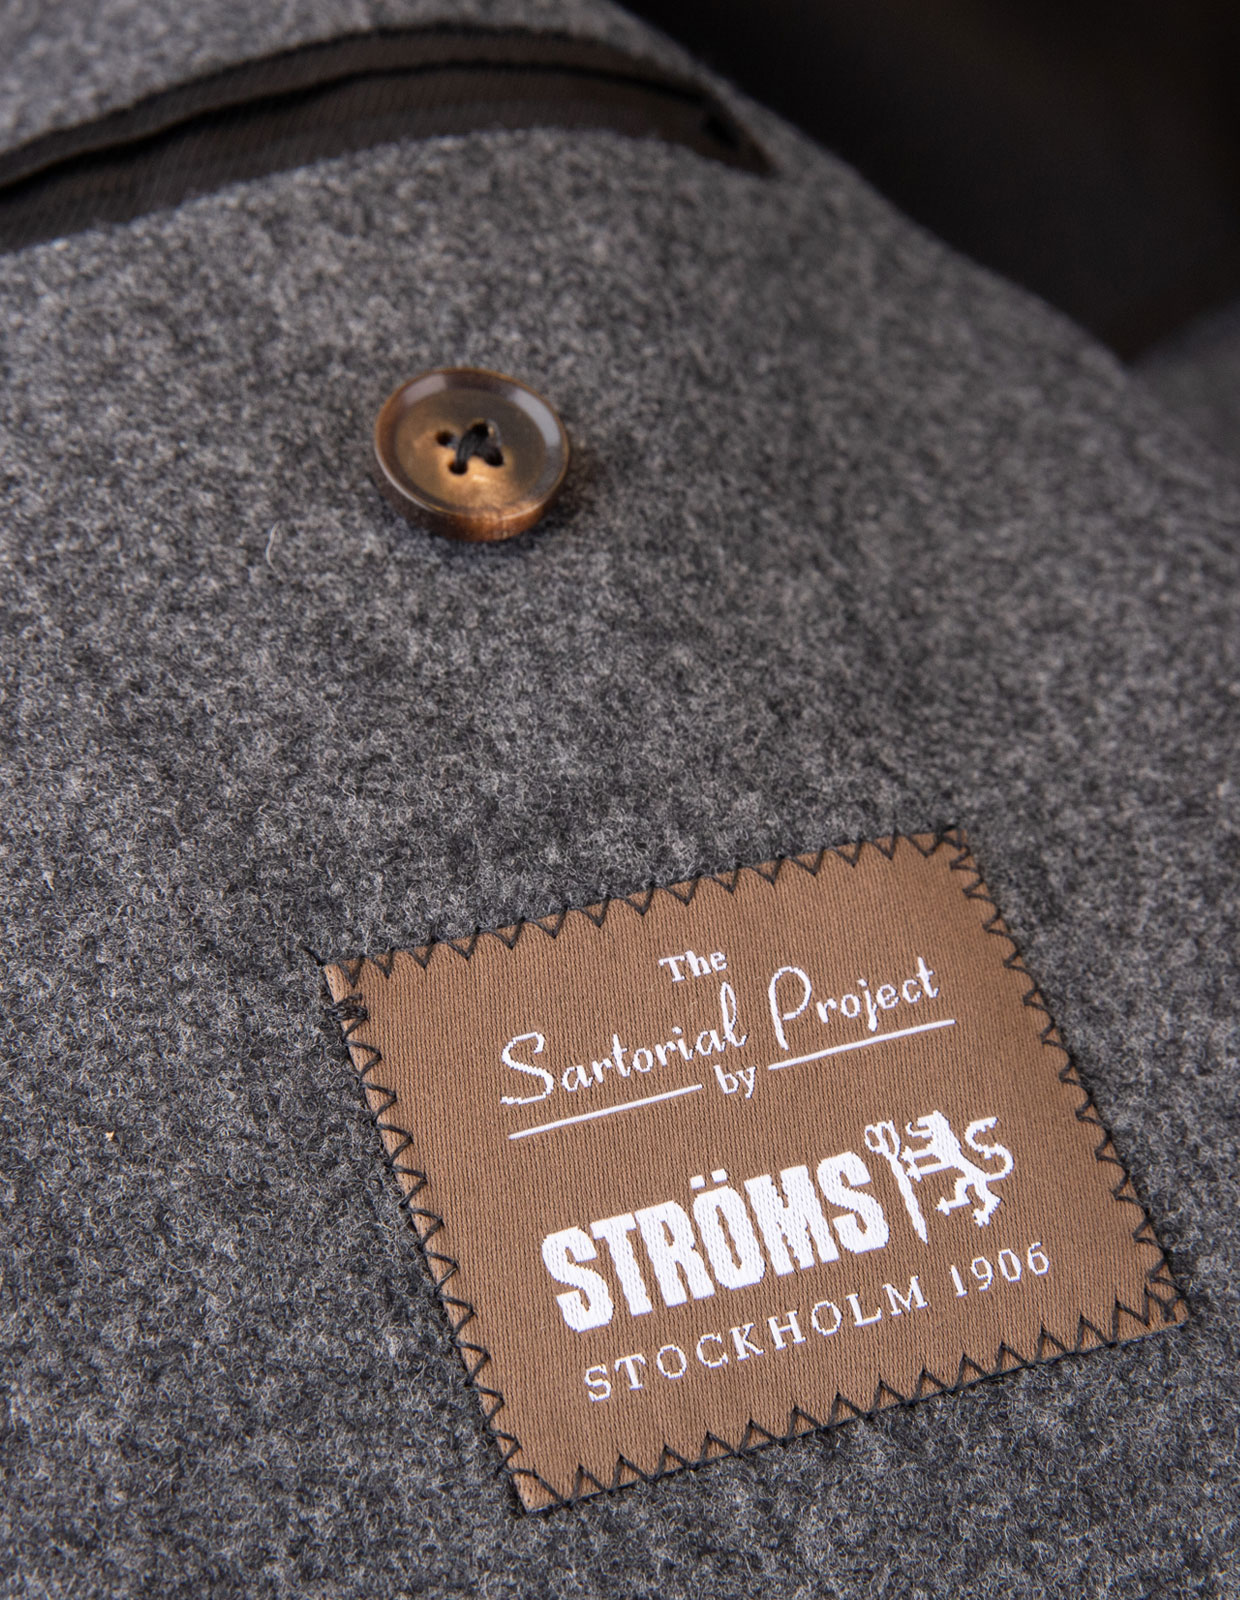 Sartorial Jacket Original Woollen Flannel Grey Stl 46